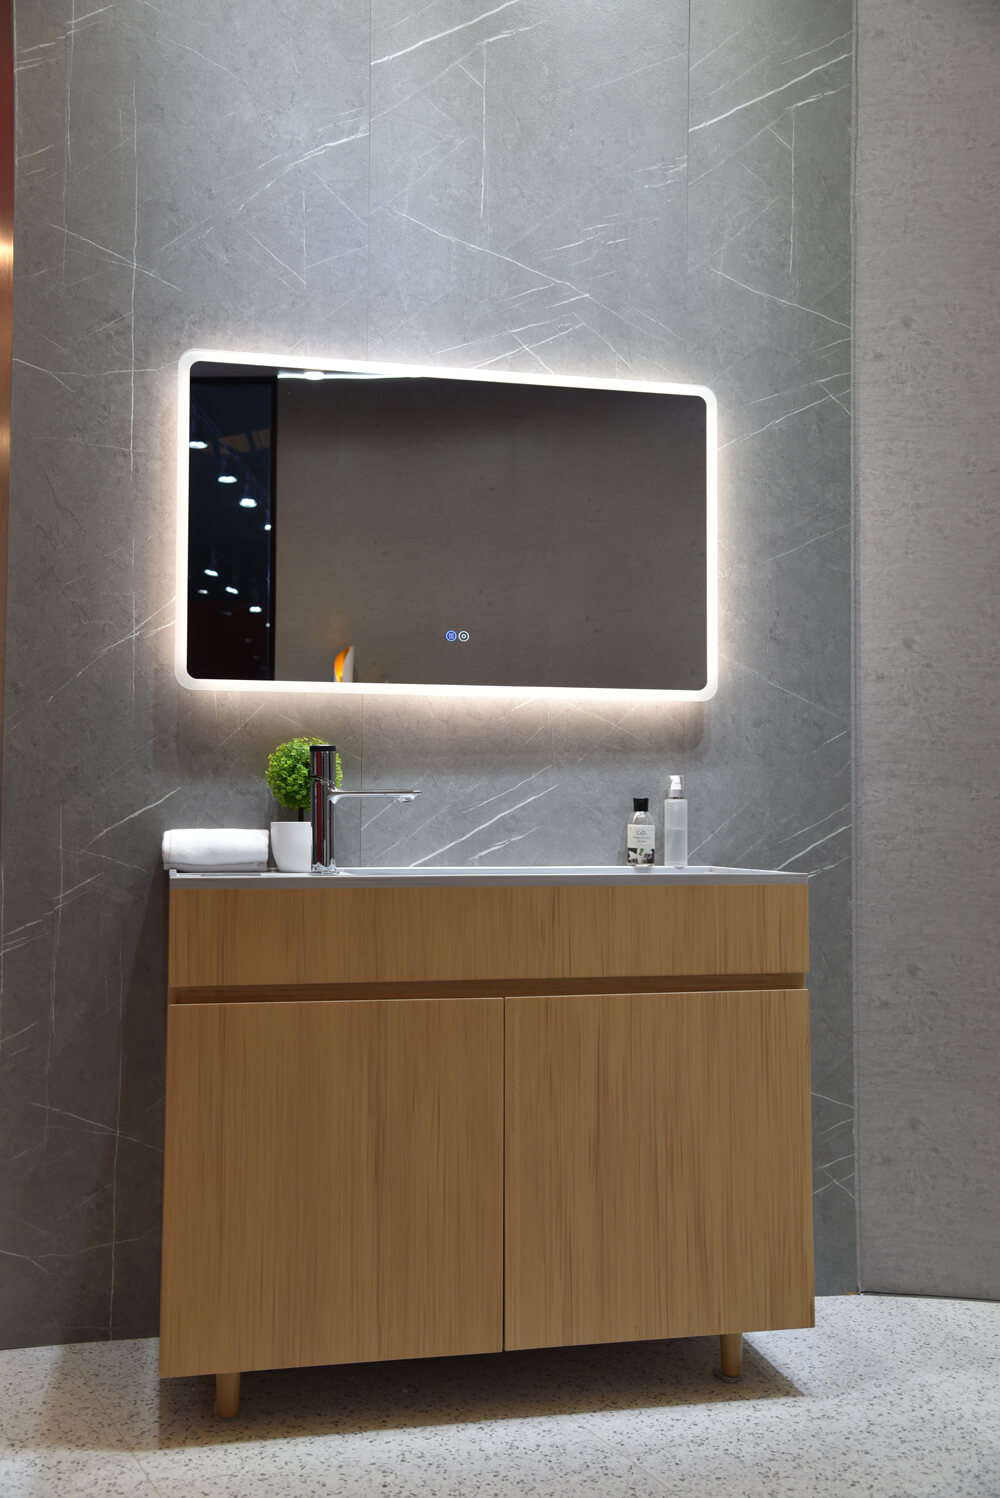 chinese LED bathroom mirror market